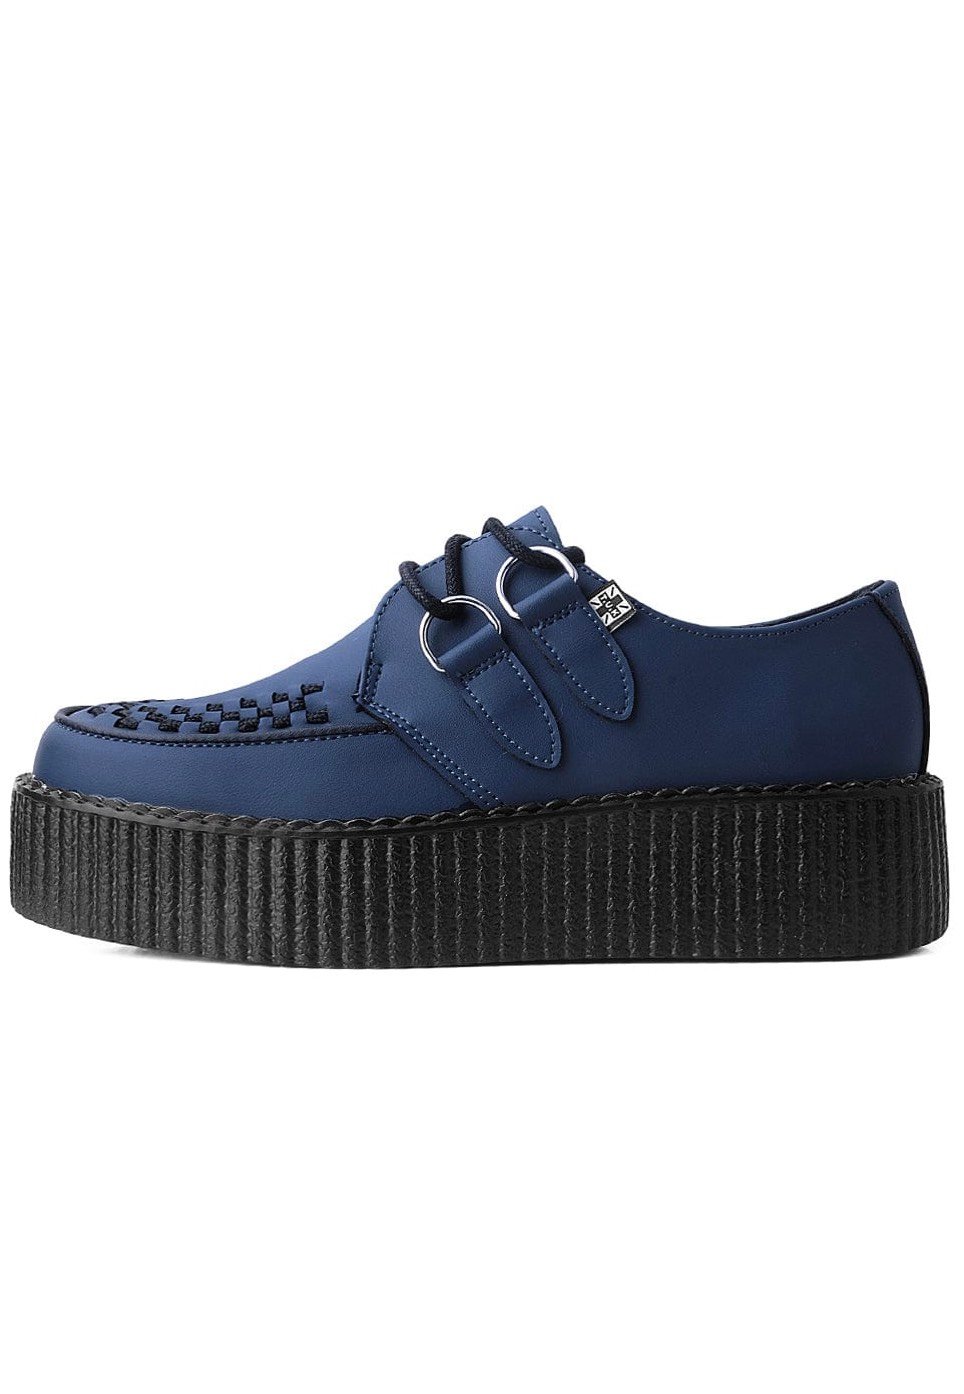 T.U.K. - Viva High Creeper Night Blue Vegan - Girl Shoes